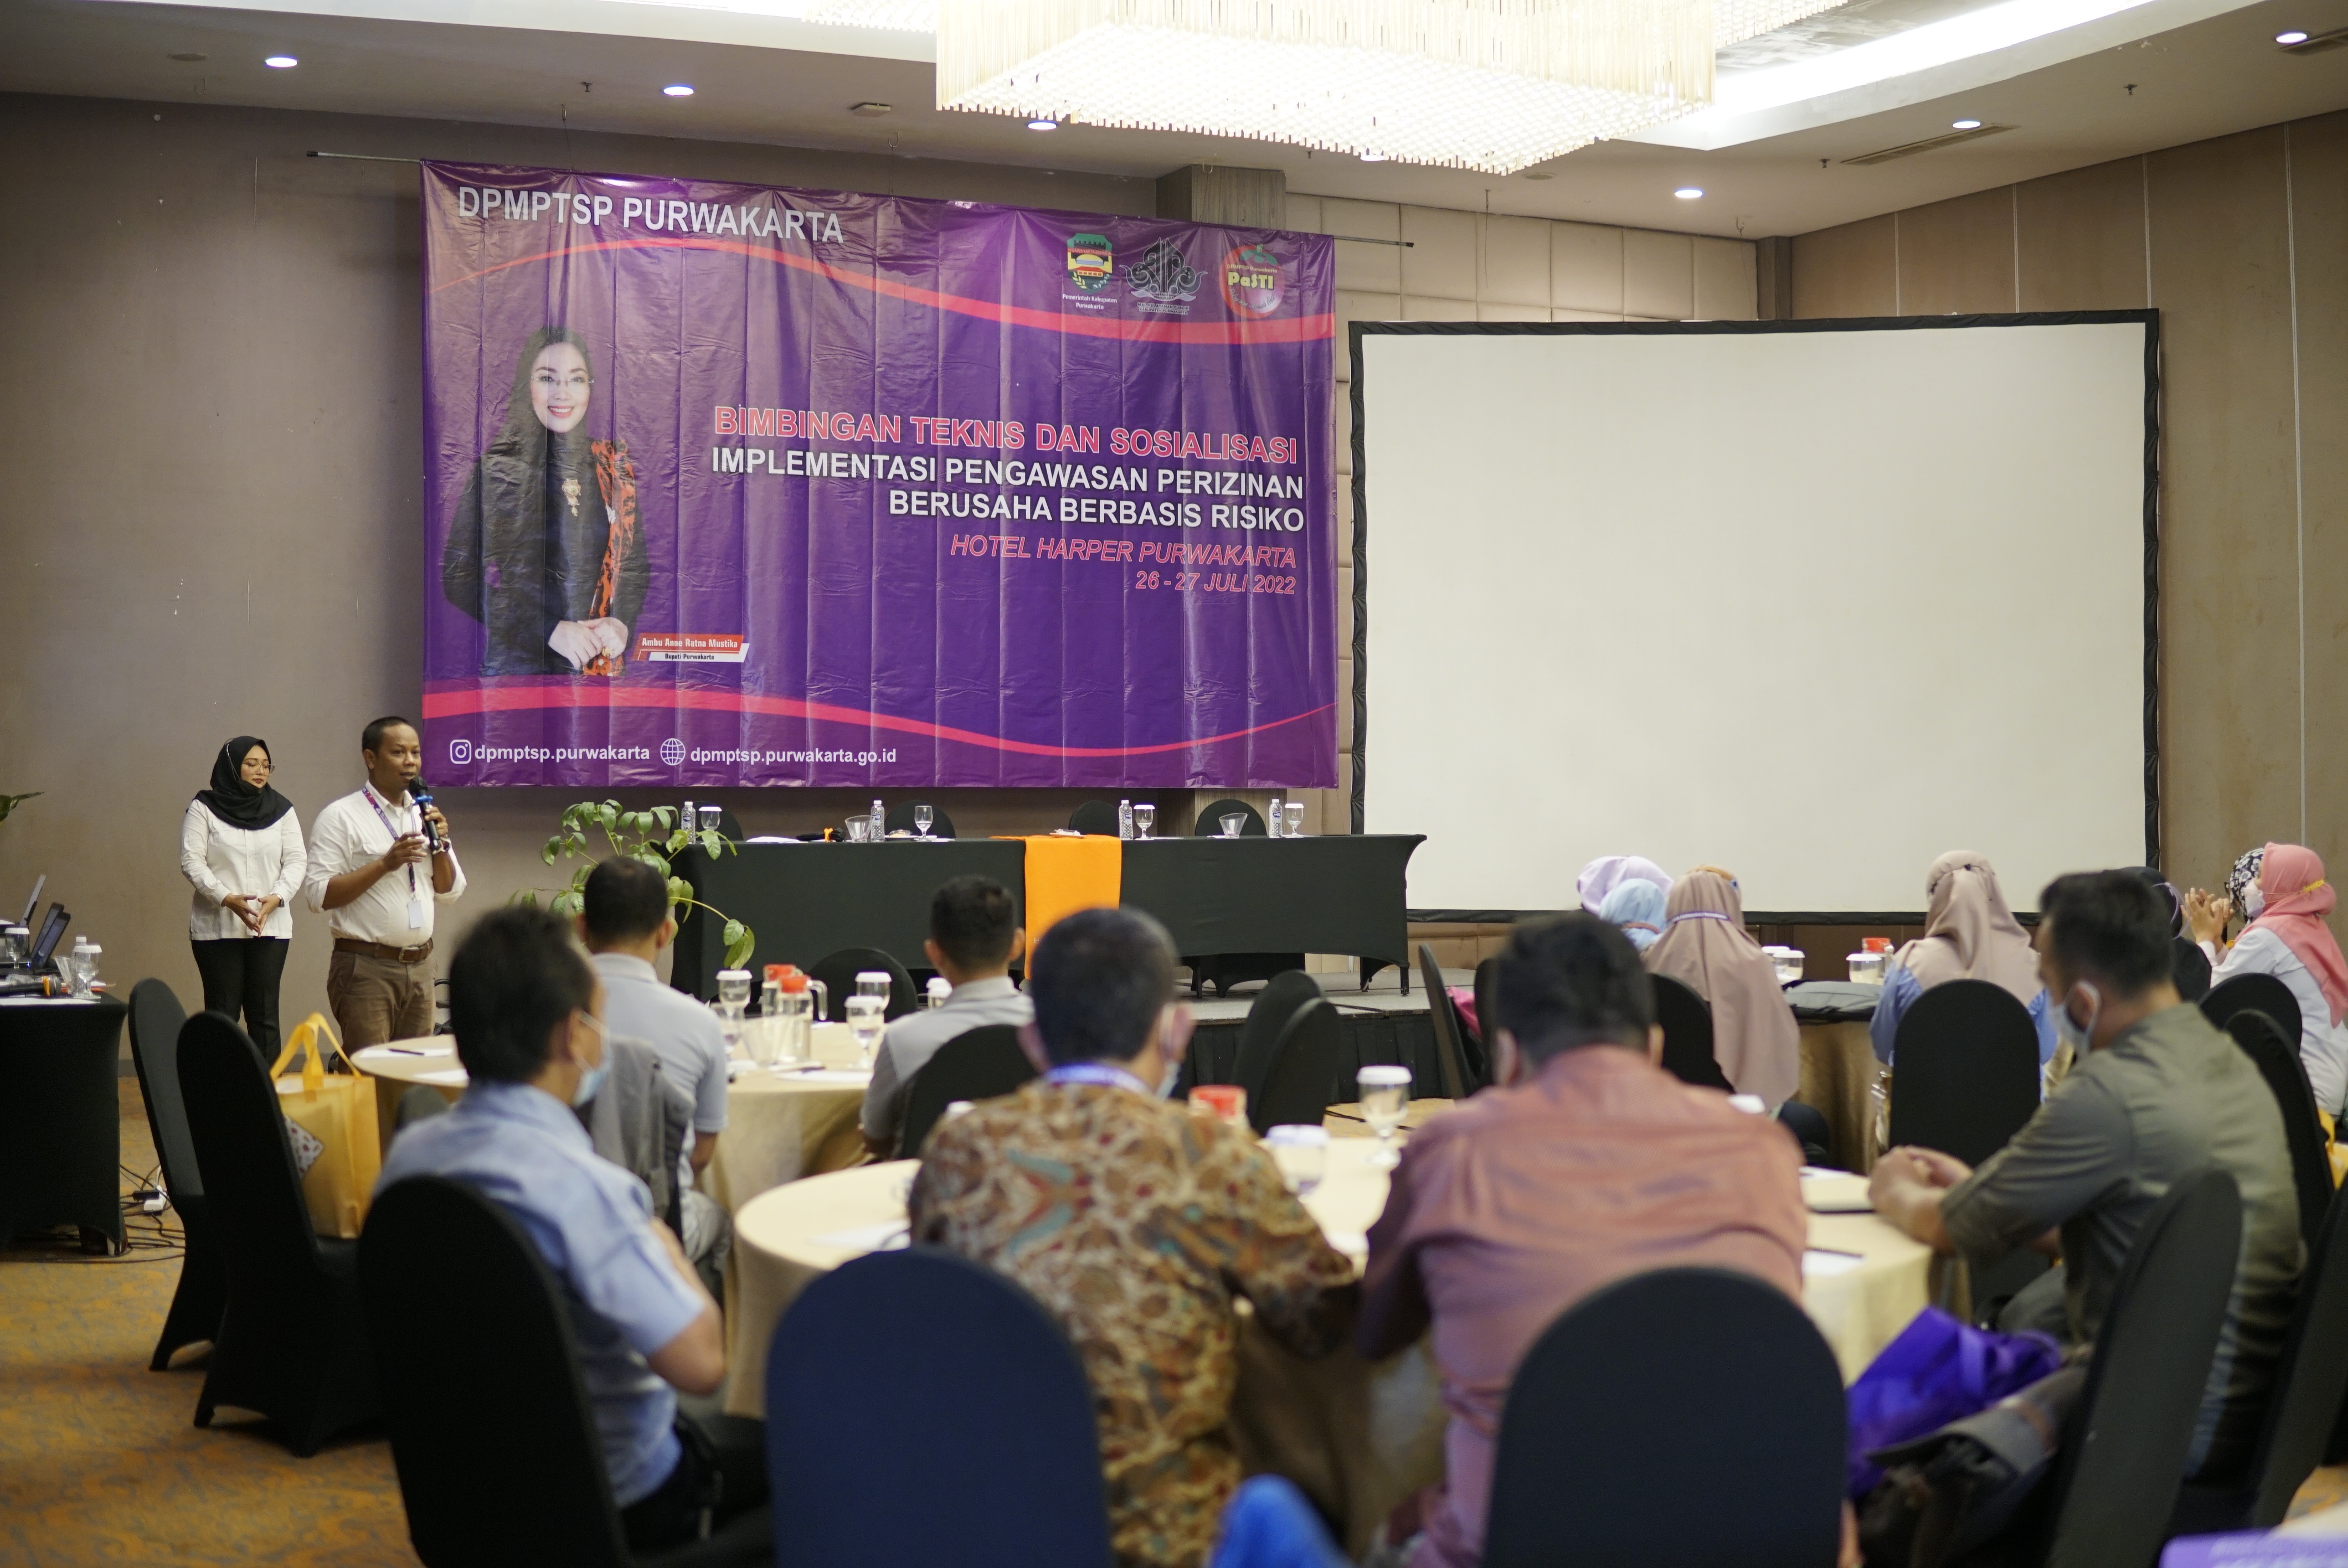 DPMPTSP Purwakarta Menyelenggarakan Kegiatan Bimtek & Sosialisasi Implementasi Pengawasan Perizinan Berusaha Berbasis Ri